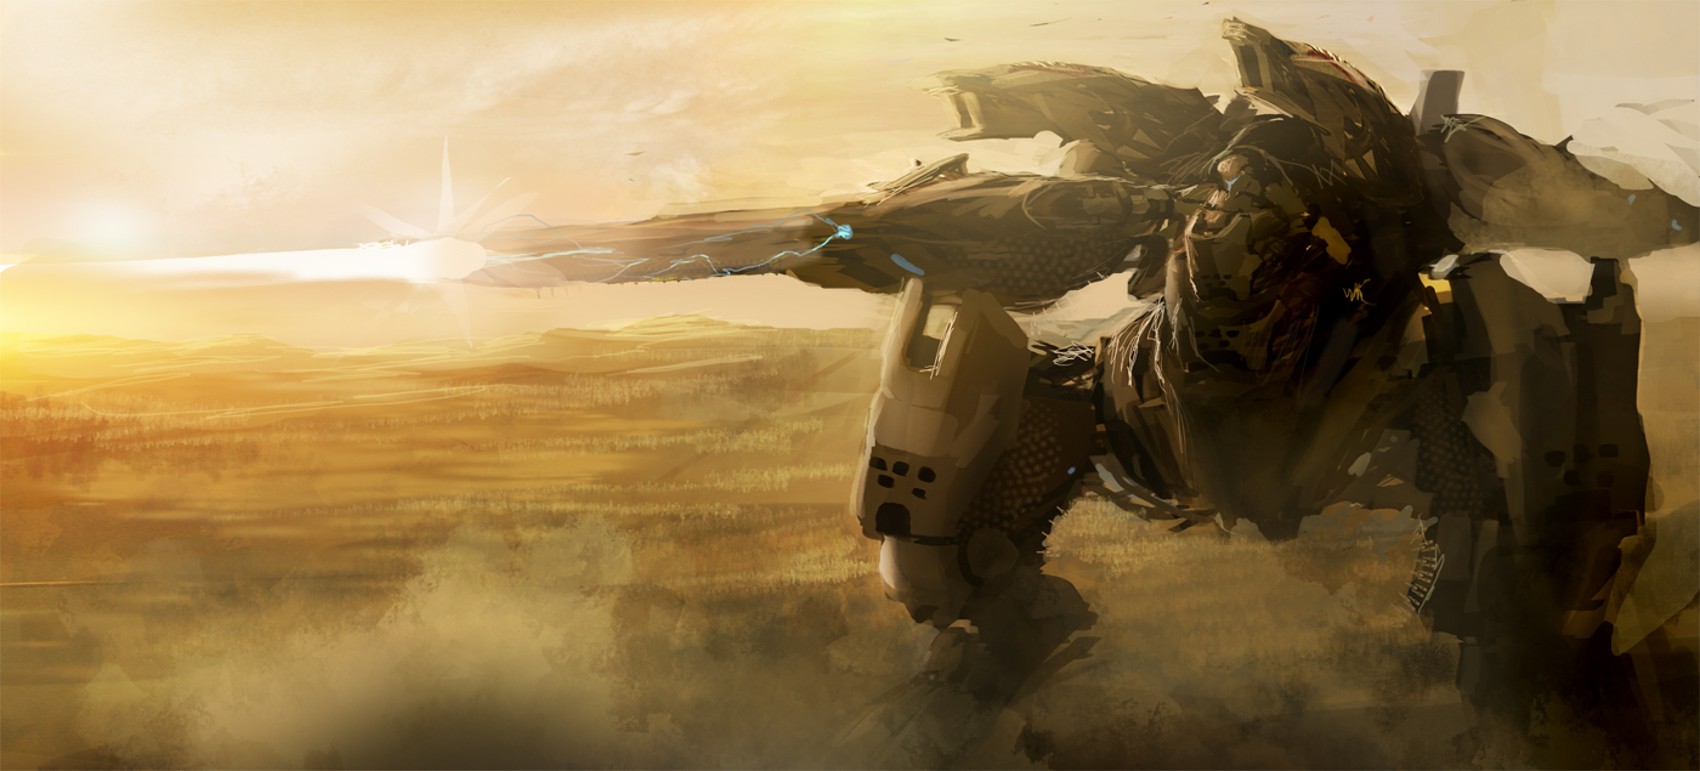 General 1700x771 artwork mechs robot soldier war futuristic weapon science fiction